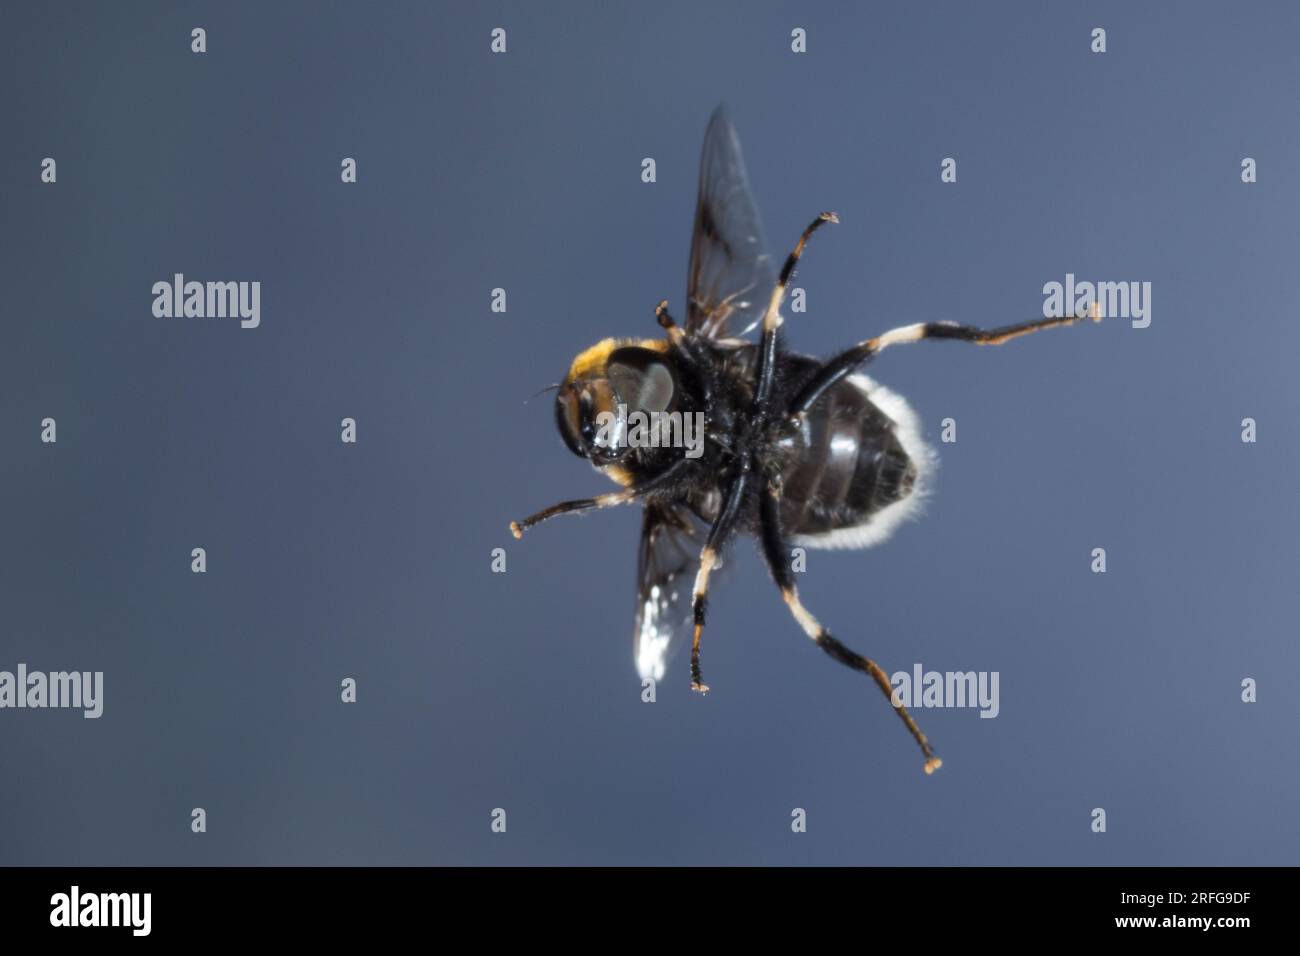 Hummel-Keilfleckschwebfliege, Pelzige Mistbiene, Pelzige Bienenschwebfliege, Flug, fliegend, Tarnung, Mimikry, Mimikri wegen Hummelähnlichem Aussehen, Foto Stock